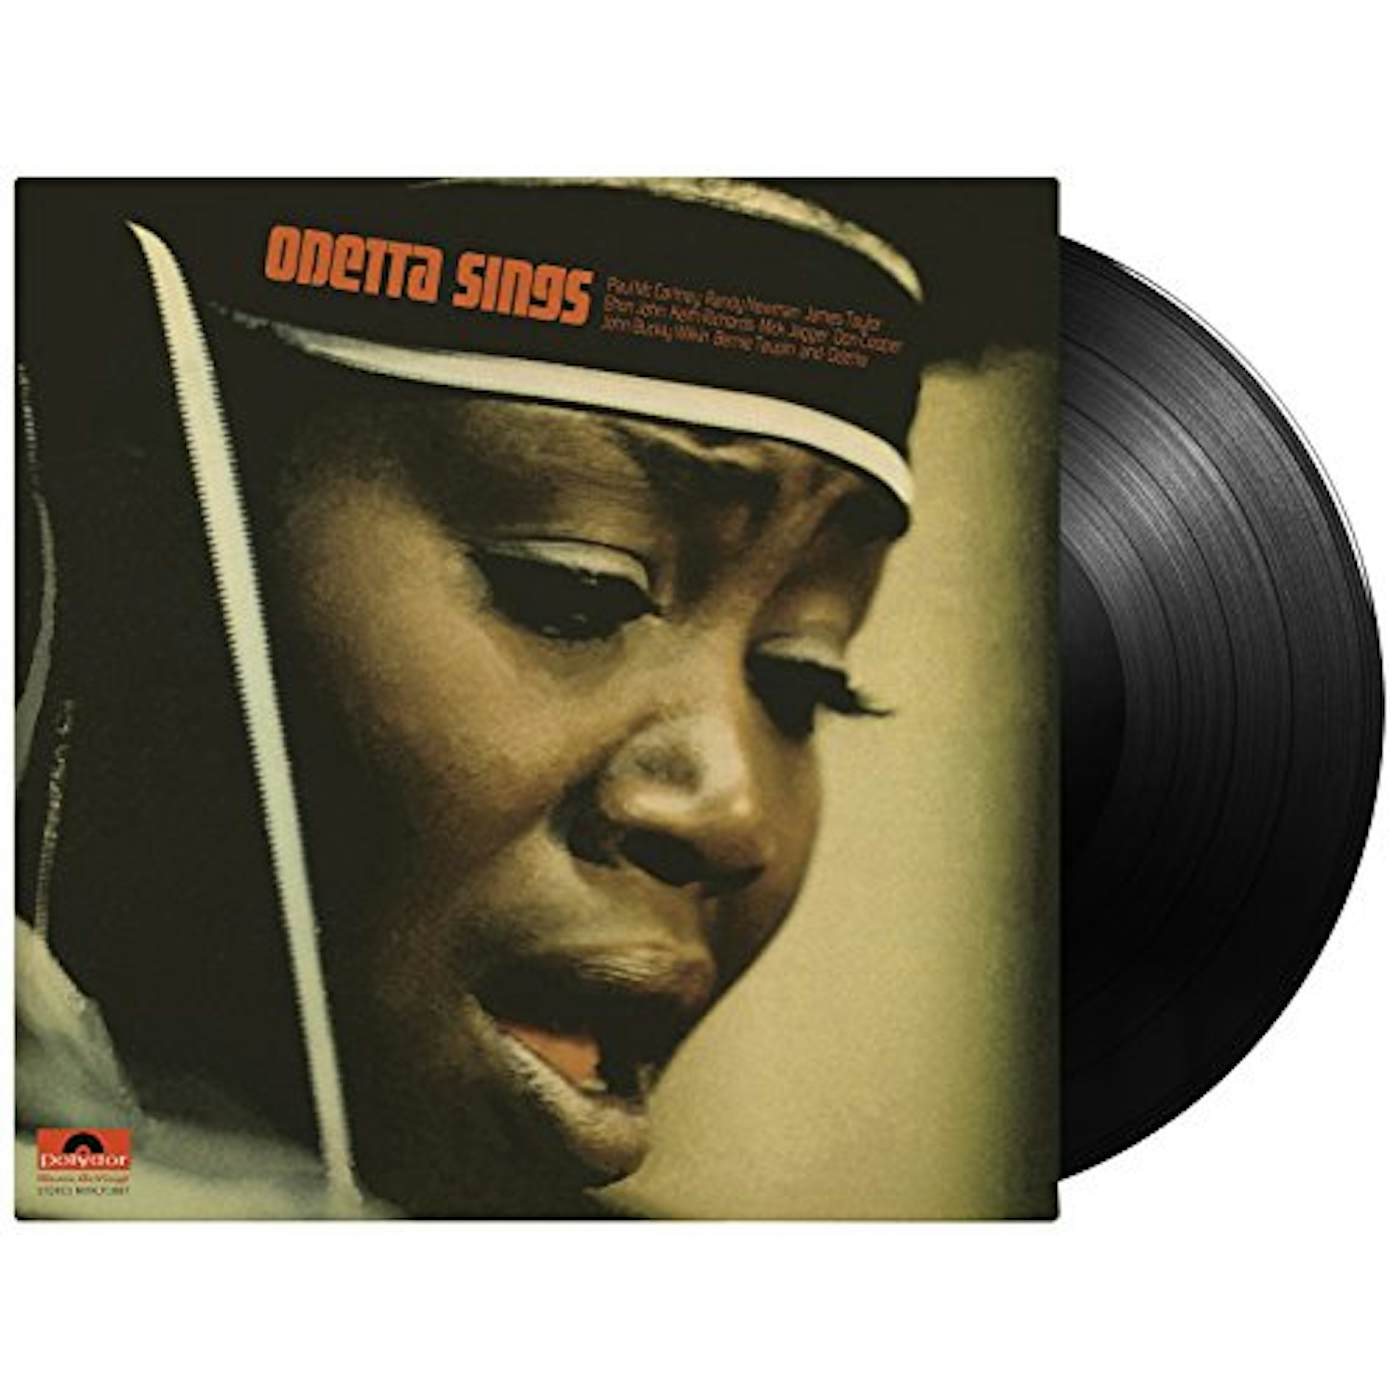 Odetta Sings Vinyl Record